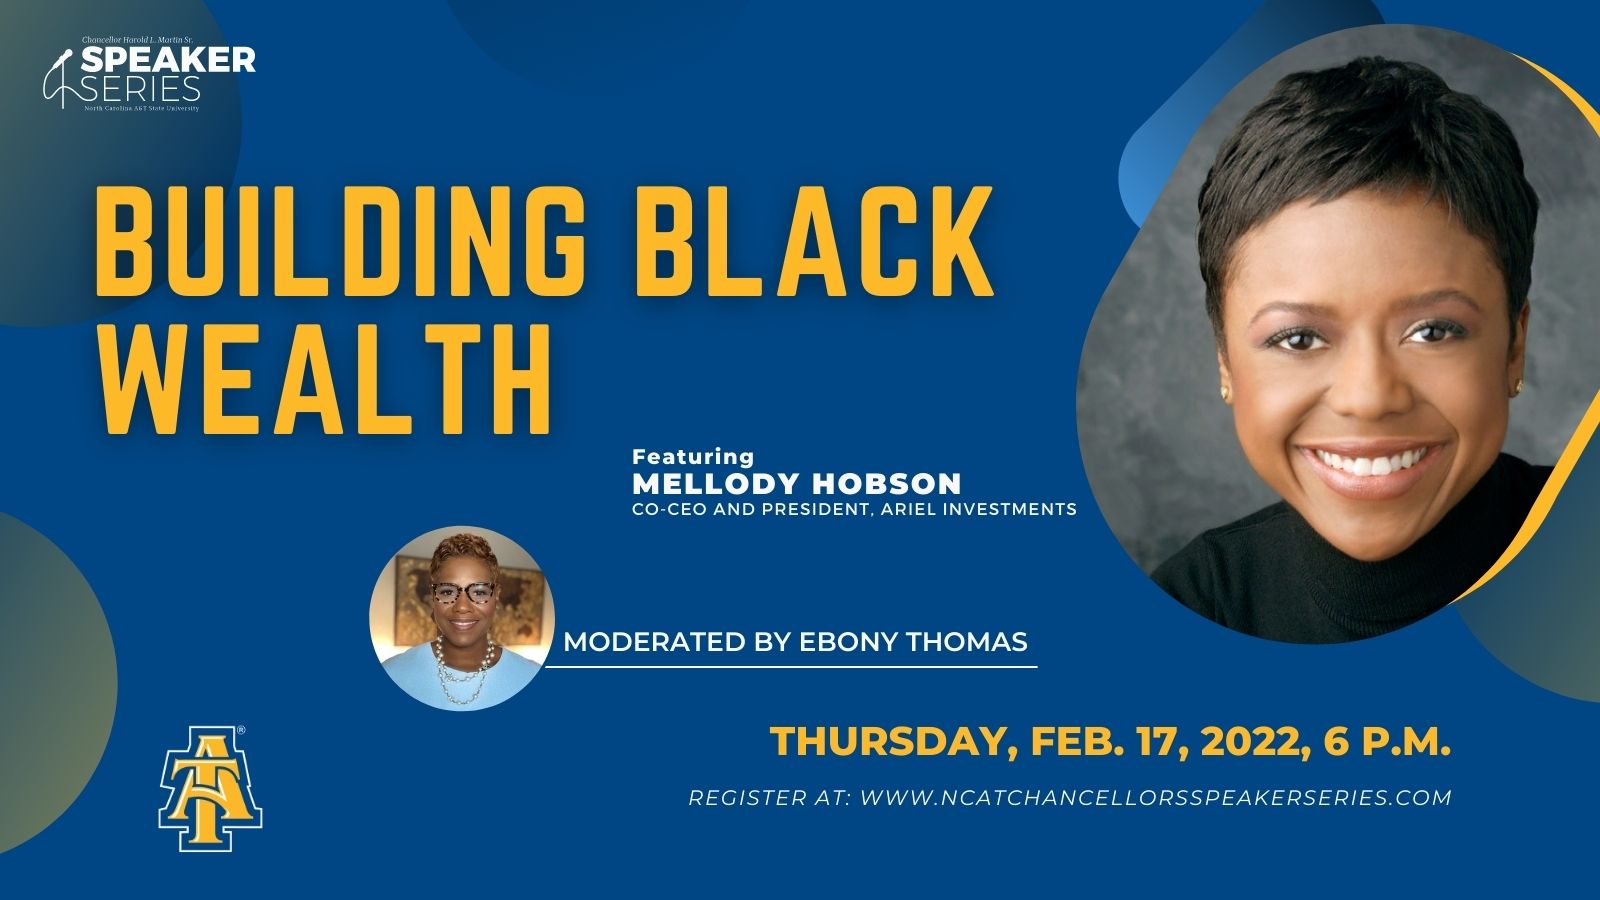 Mellody Hobson building black wealth banner